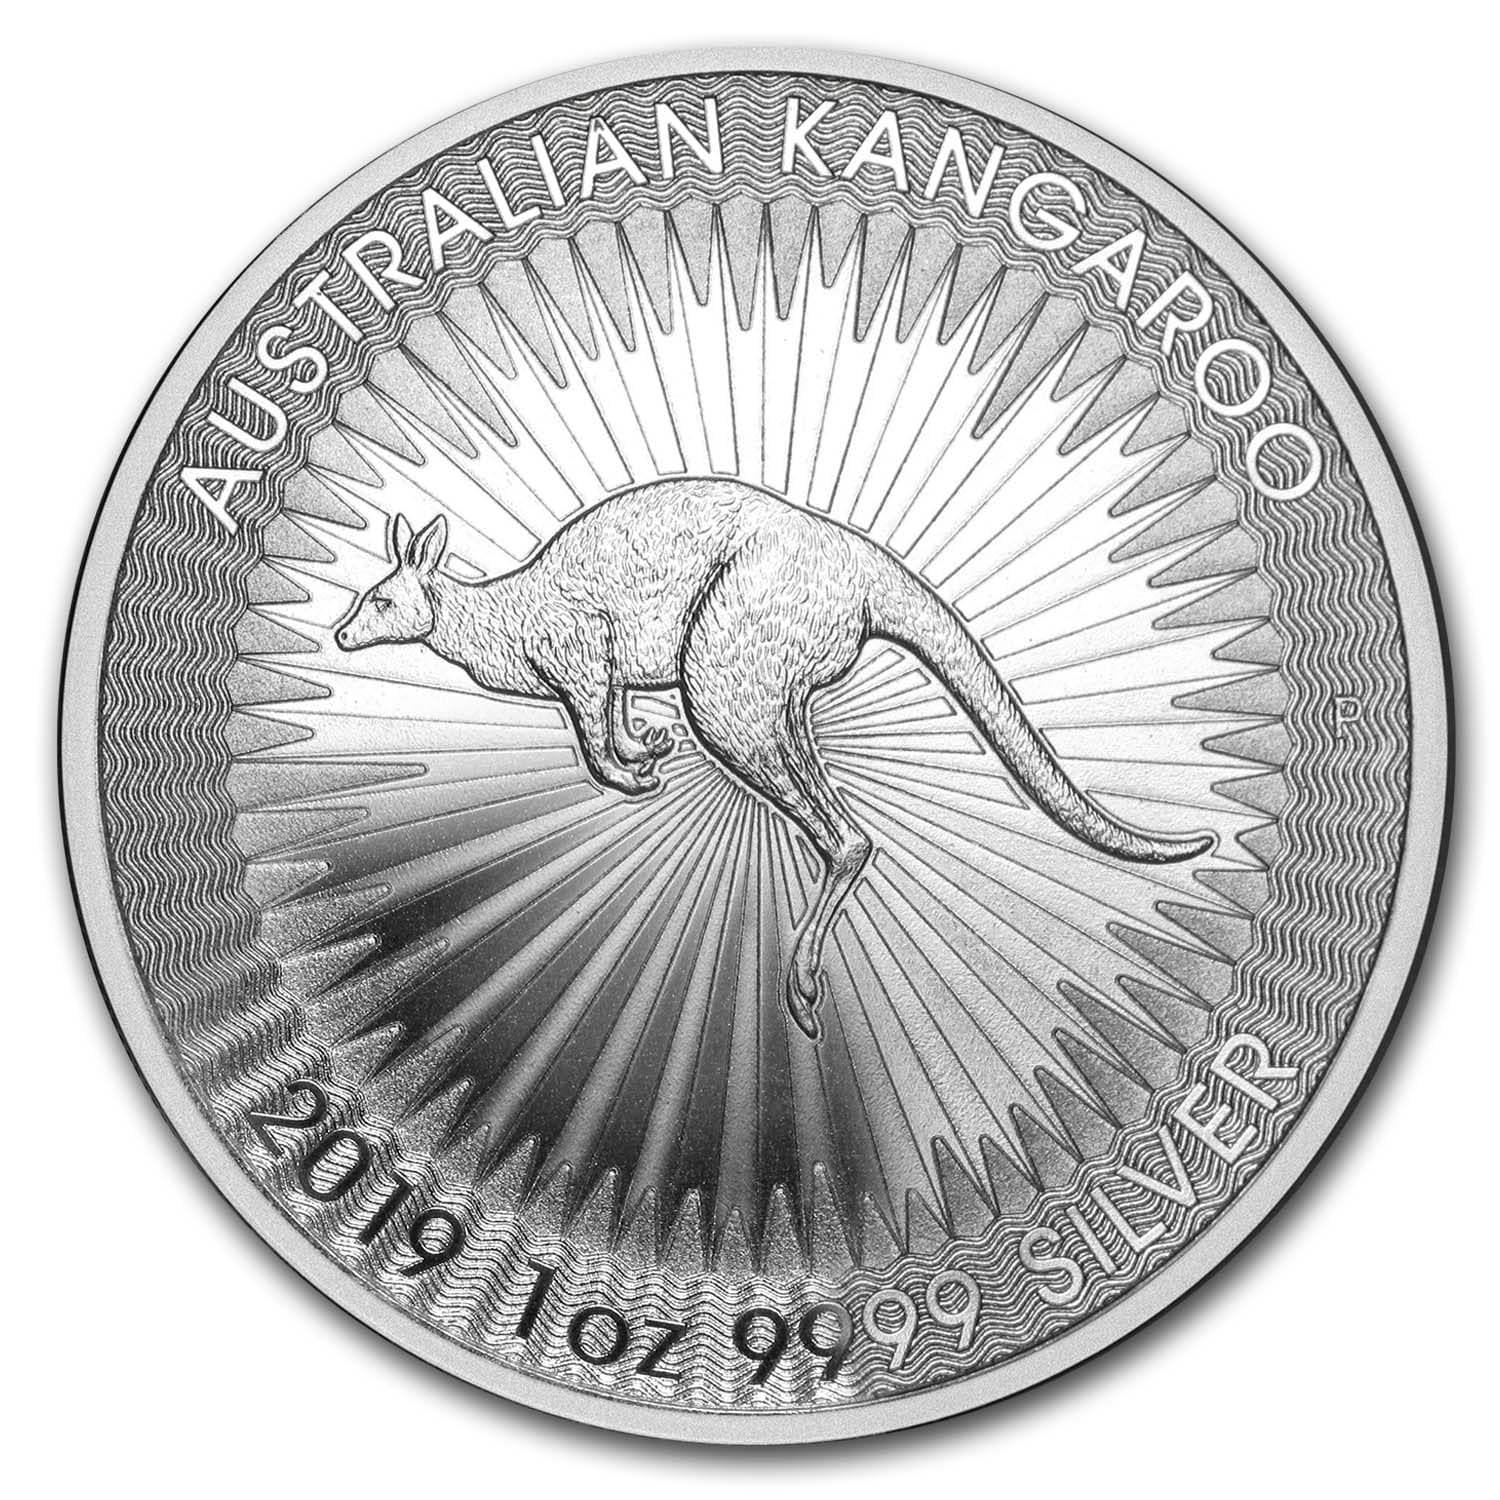 Buy 2019 Australia 1 oz Silver Kangaroo BU